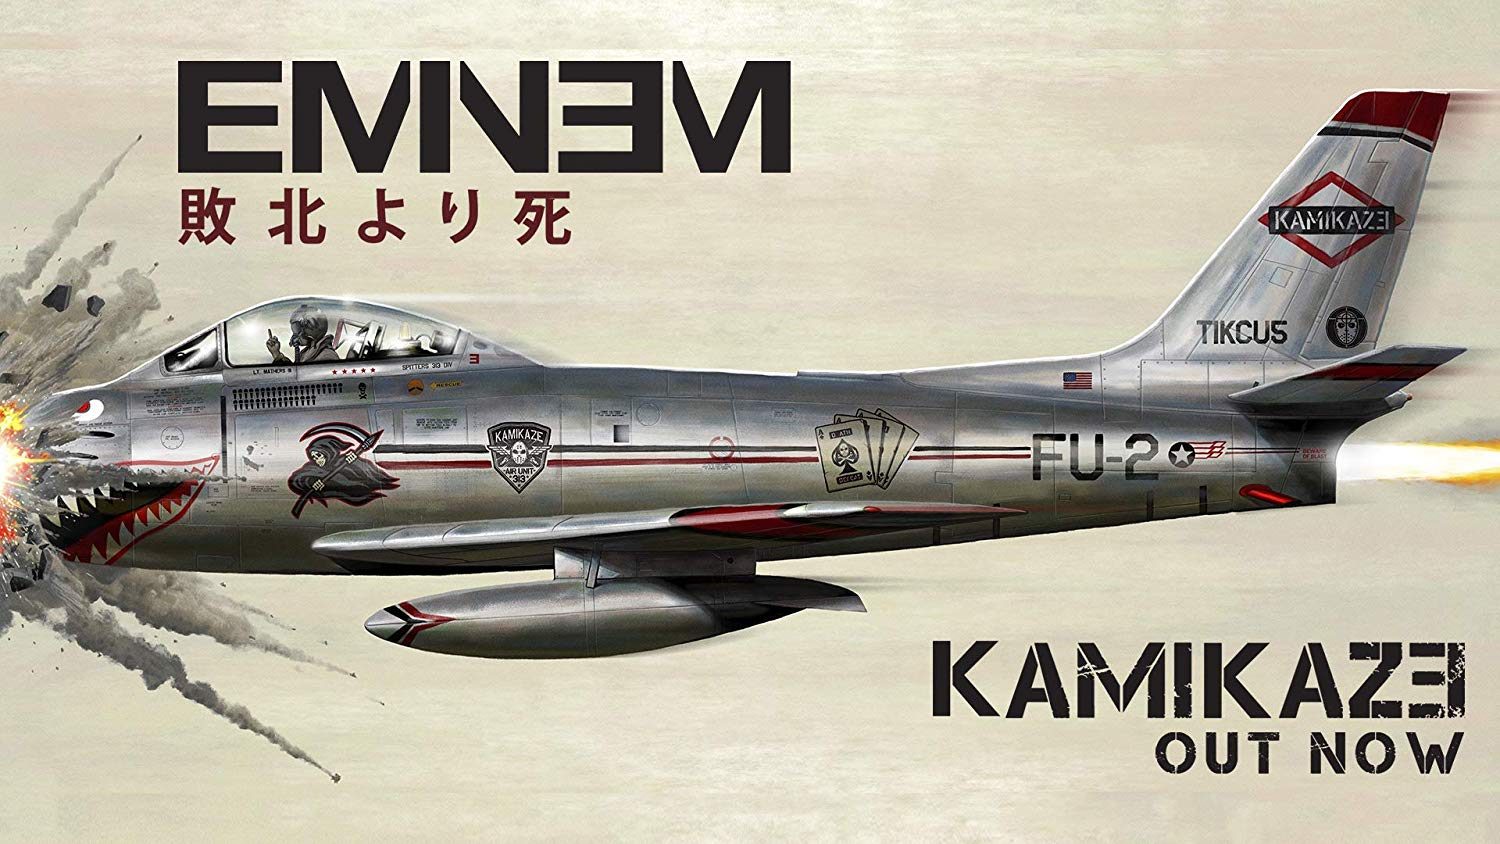 Kamikaze reveiws and ratings